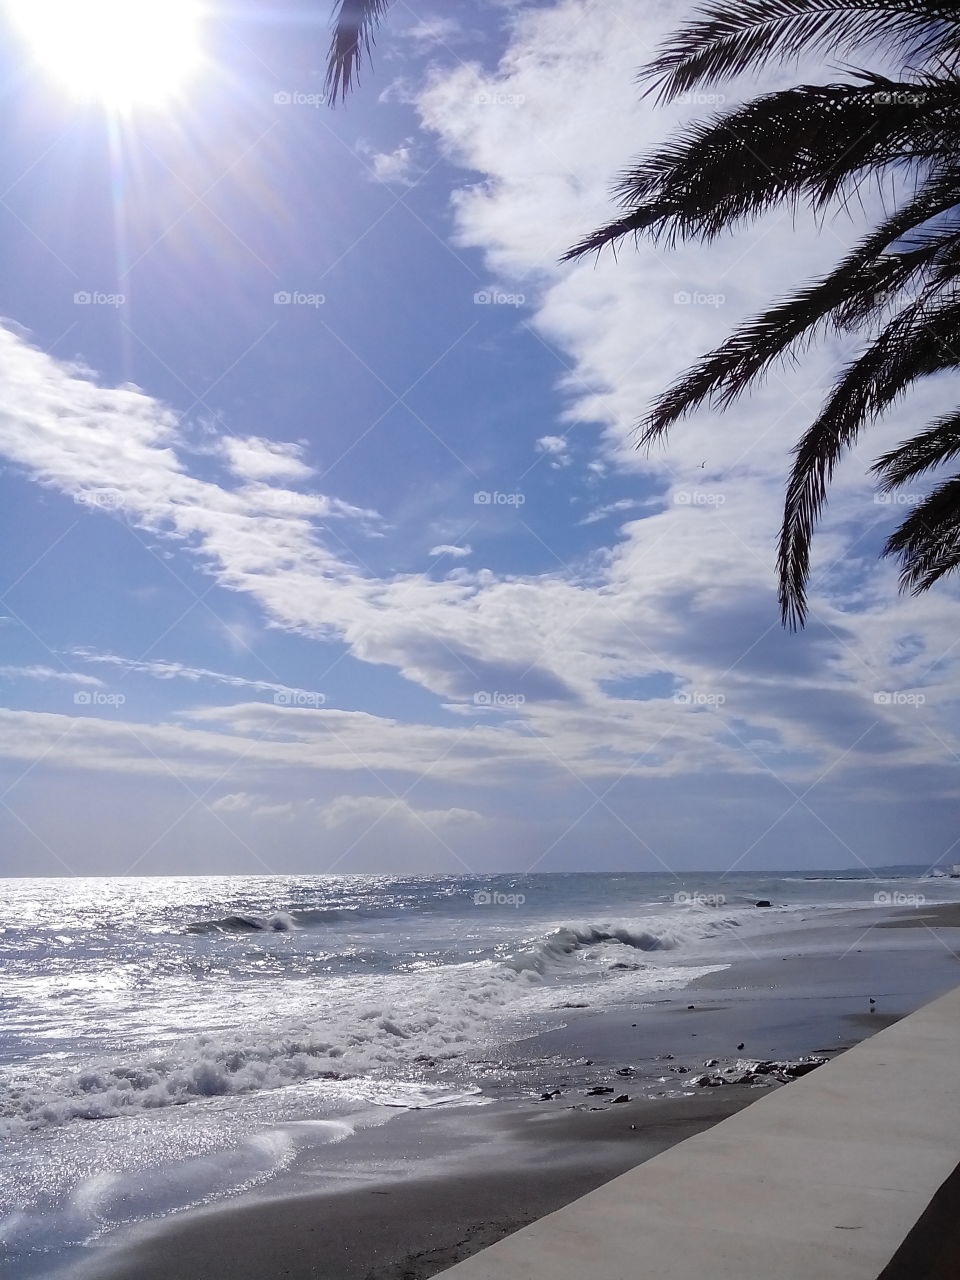 Dreamful holiday: sun, sea, palm trees 😊